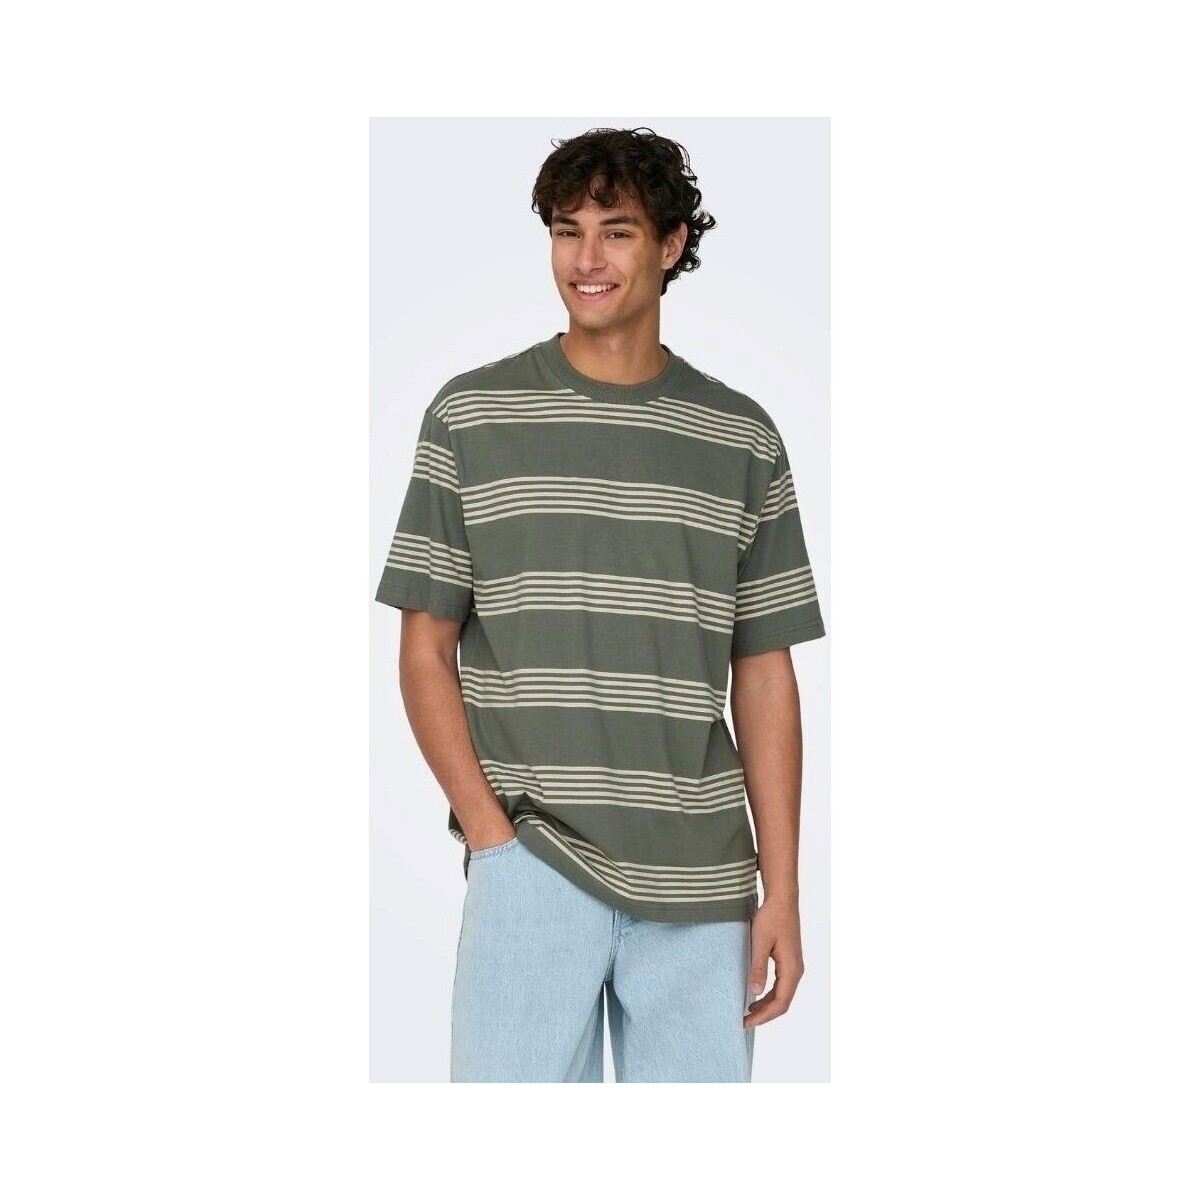 Textiel Heren T-shirts korte mouwen Only & Sons  22028148 LEONARD Multicolour